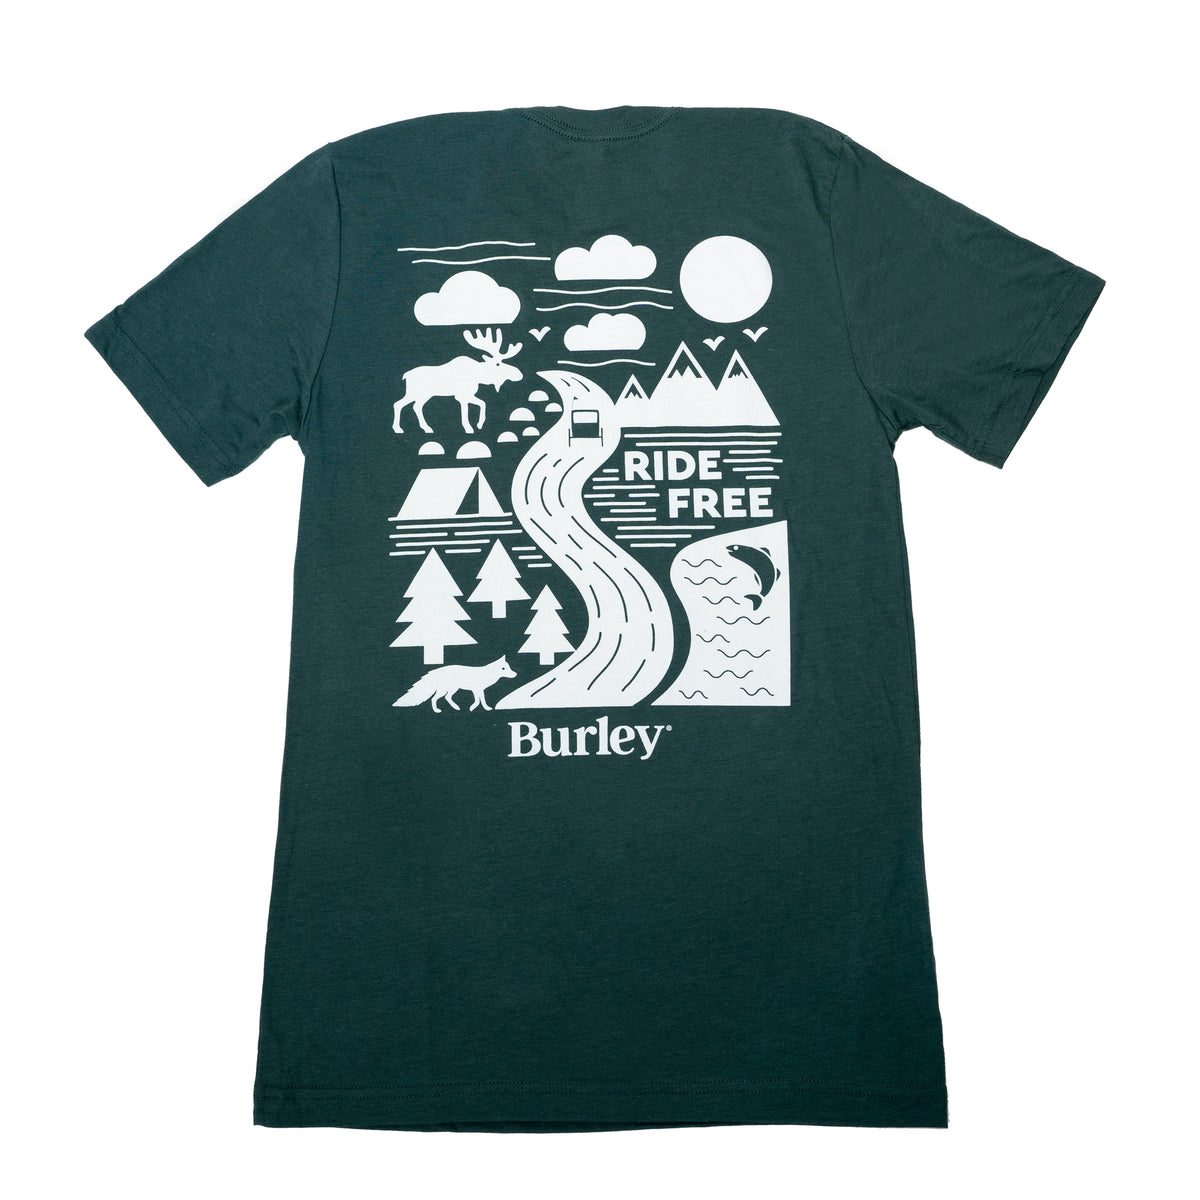 Burley Ride Free Shirt, Green